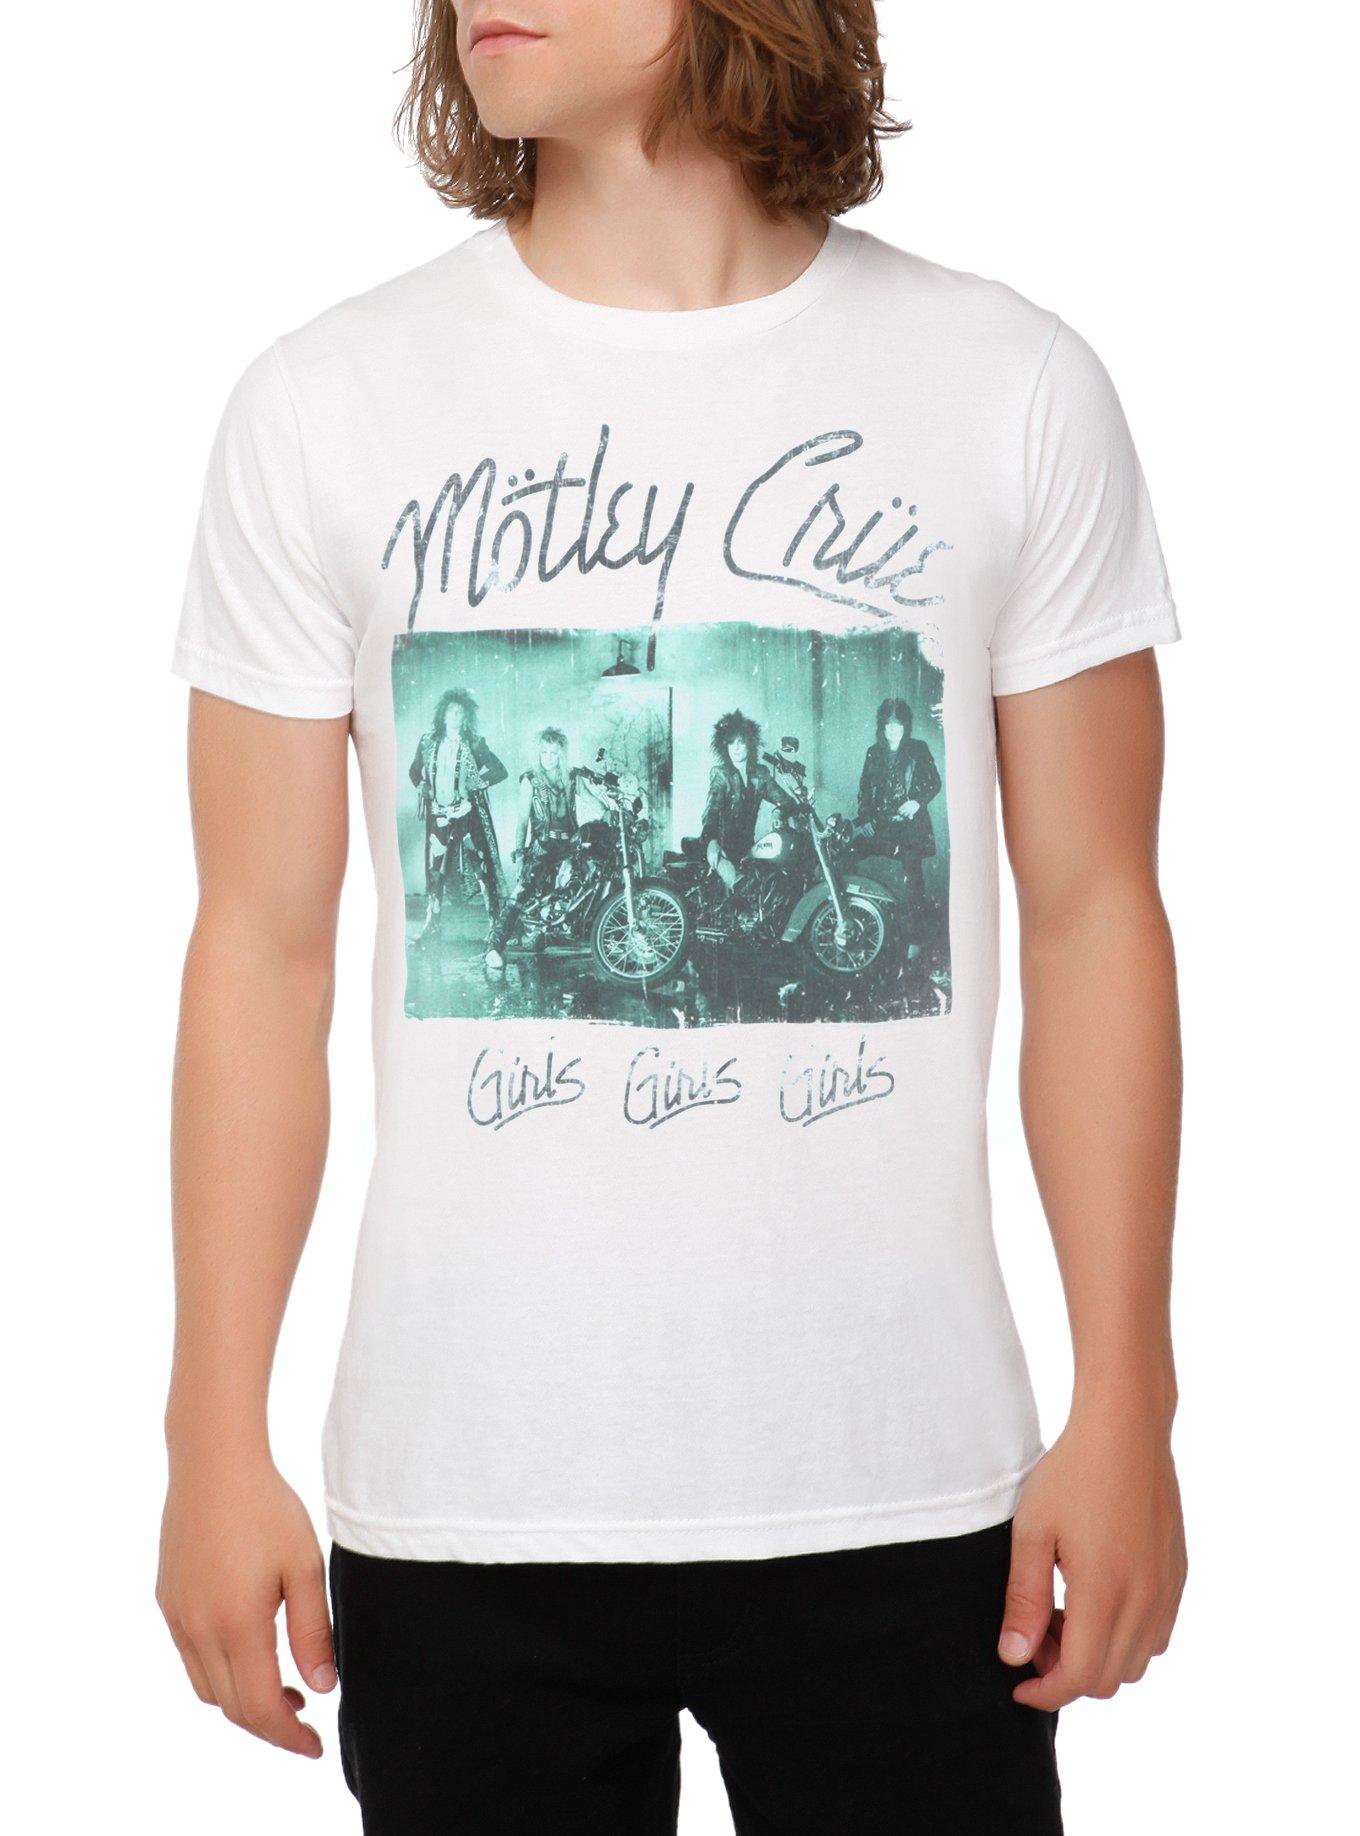 Motley Crue Girls Girls Girls T-Shirt, BLACK, hi-res